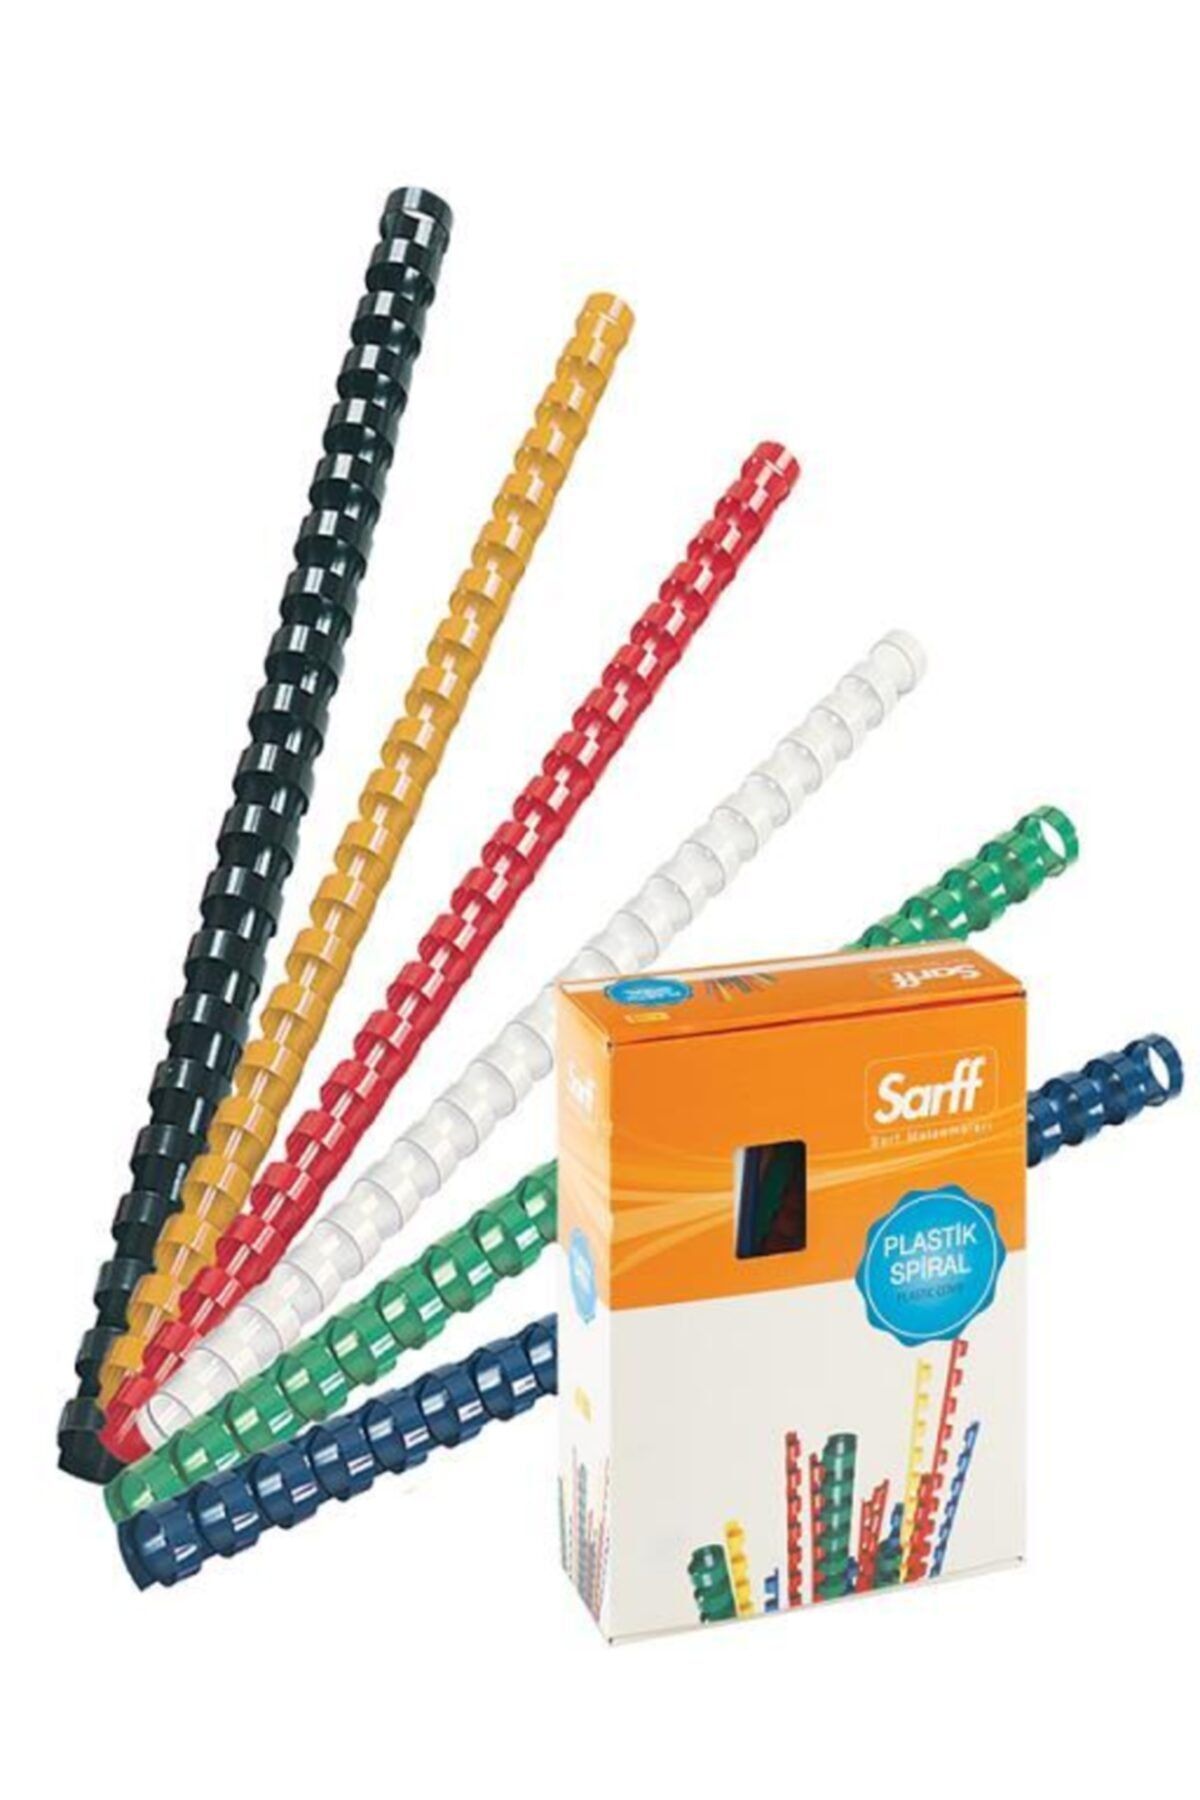 SARFF Plastik Spiral 10 Mm Beyaz 100 Lü (1 Paket 100 Adet)